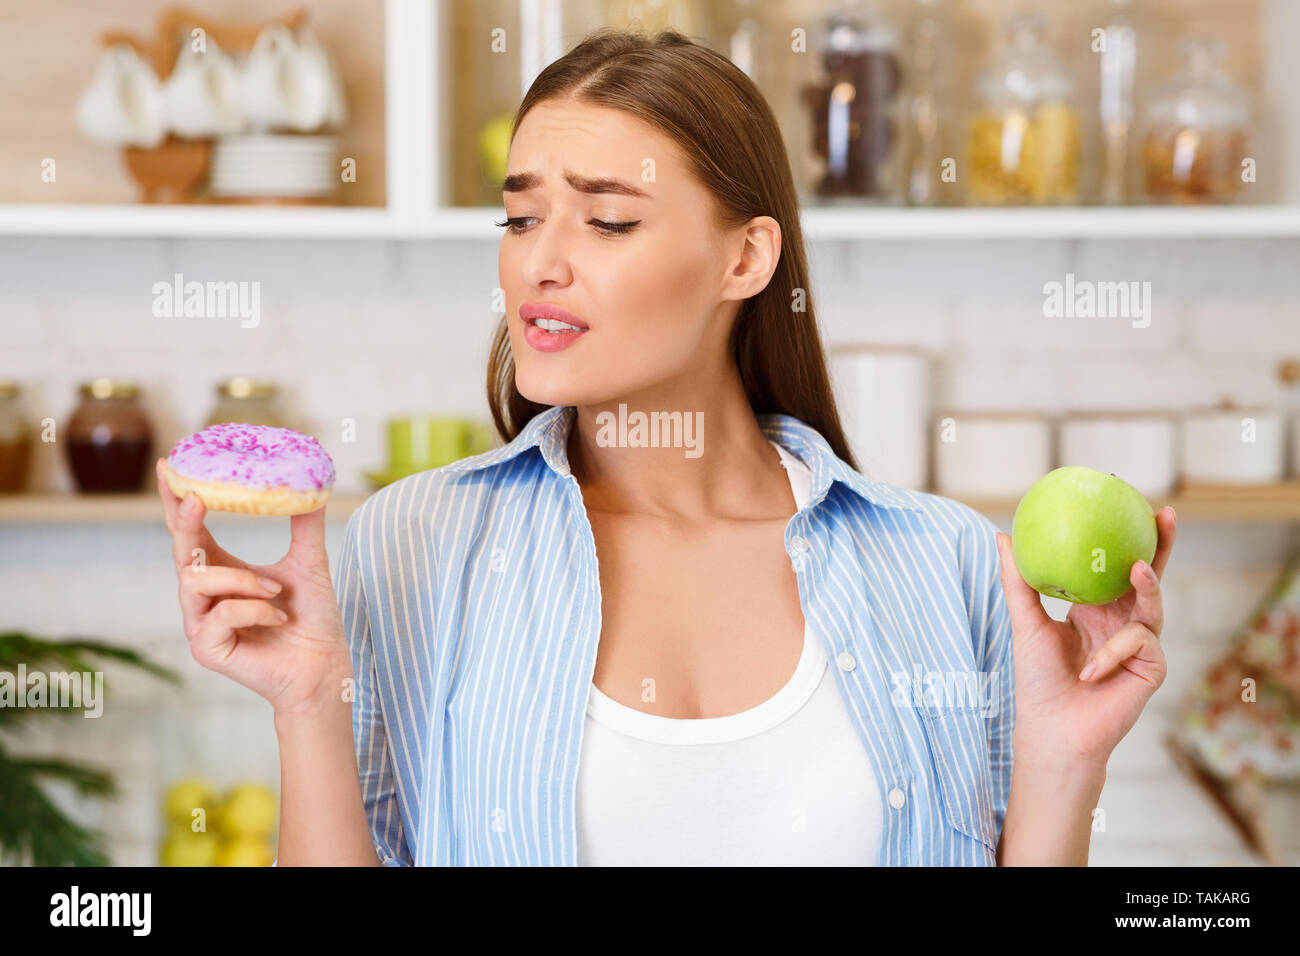 Hard Choice. Woman Choosing Between Apple And Donut Stock Photo